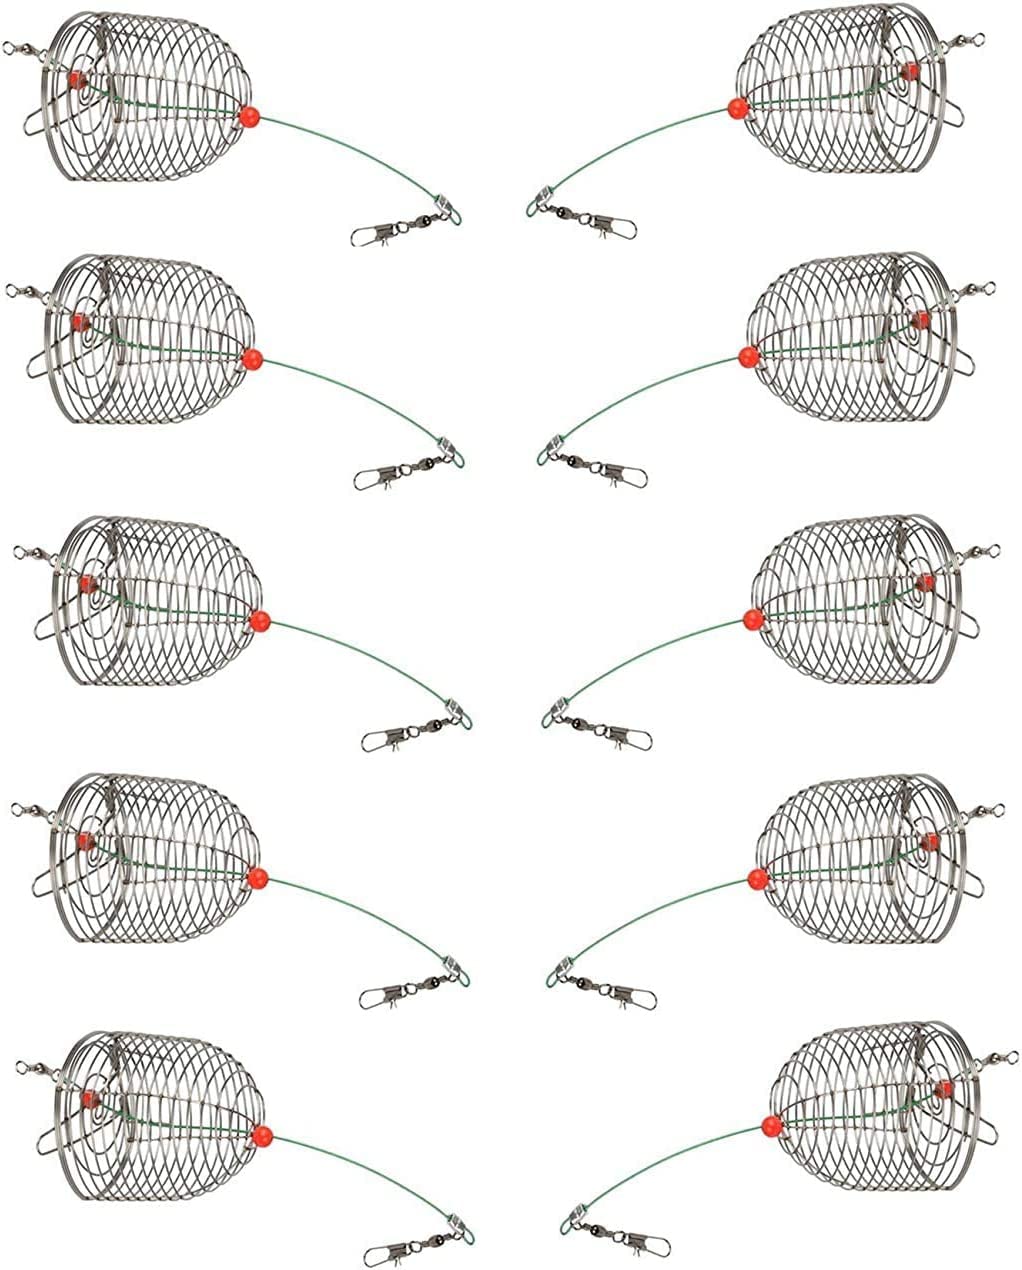  10Pcs/Pk Carp Fishing Bait Trap Cage Feeder Basket Holder  Coarse Lure Feeder Carp Fishing Tackle Kit,Size L/M/S Available